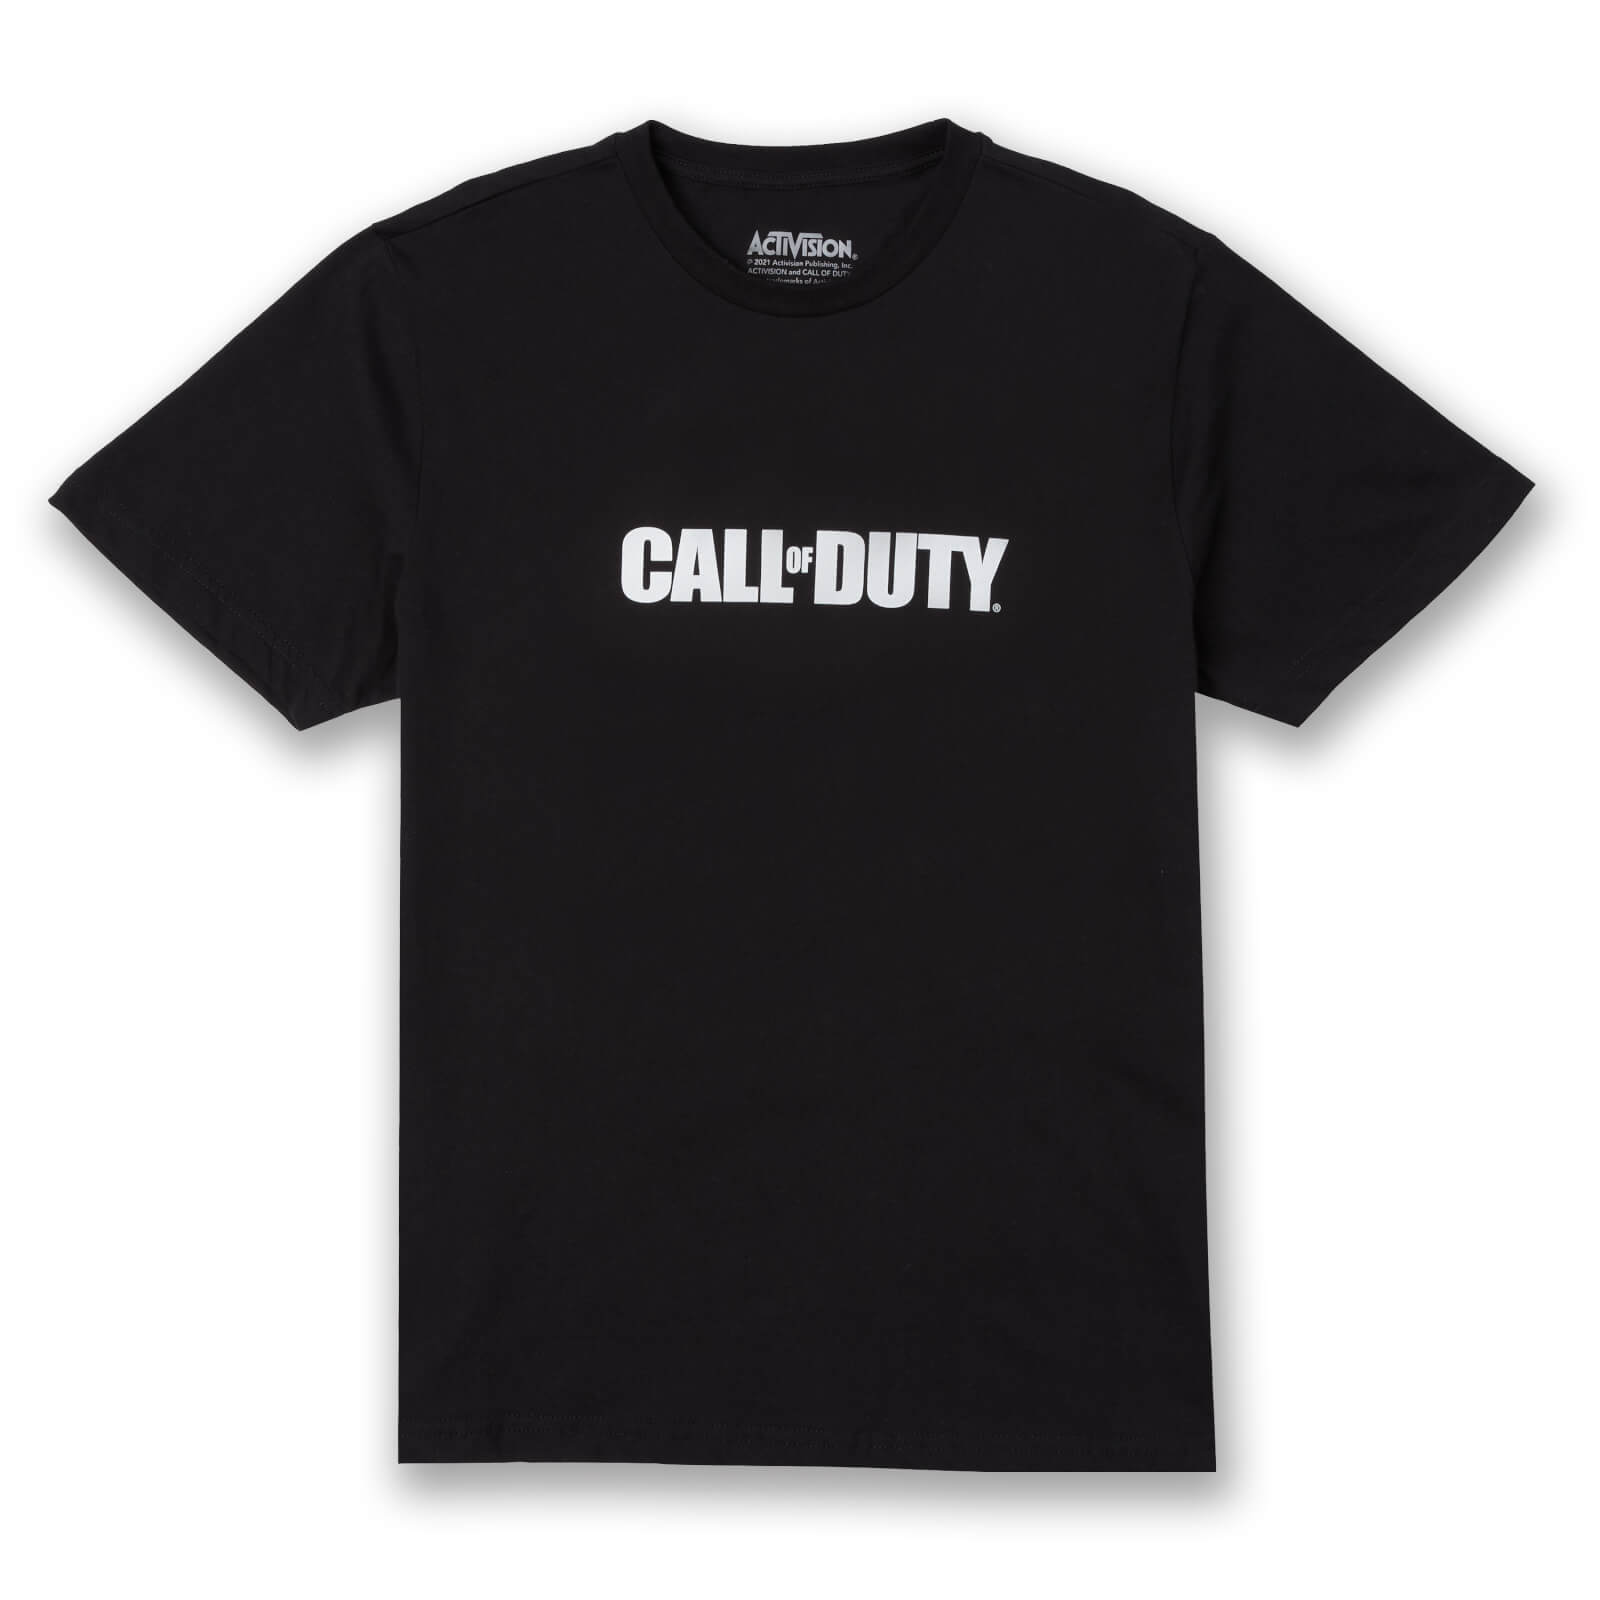 Call Of Duty Location Unisex T-Shirt - Black - XS - Black